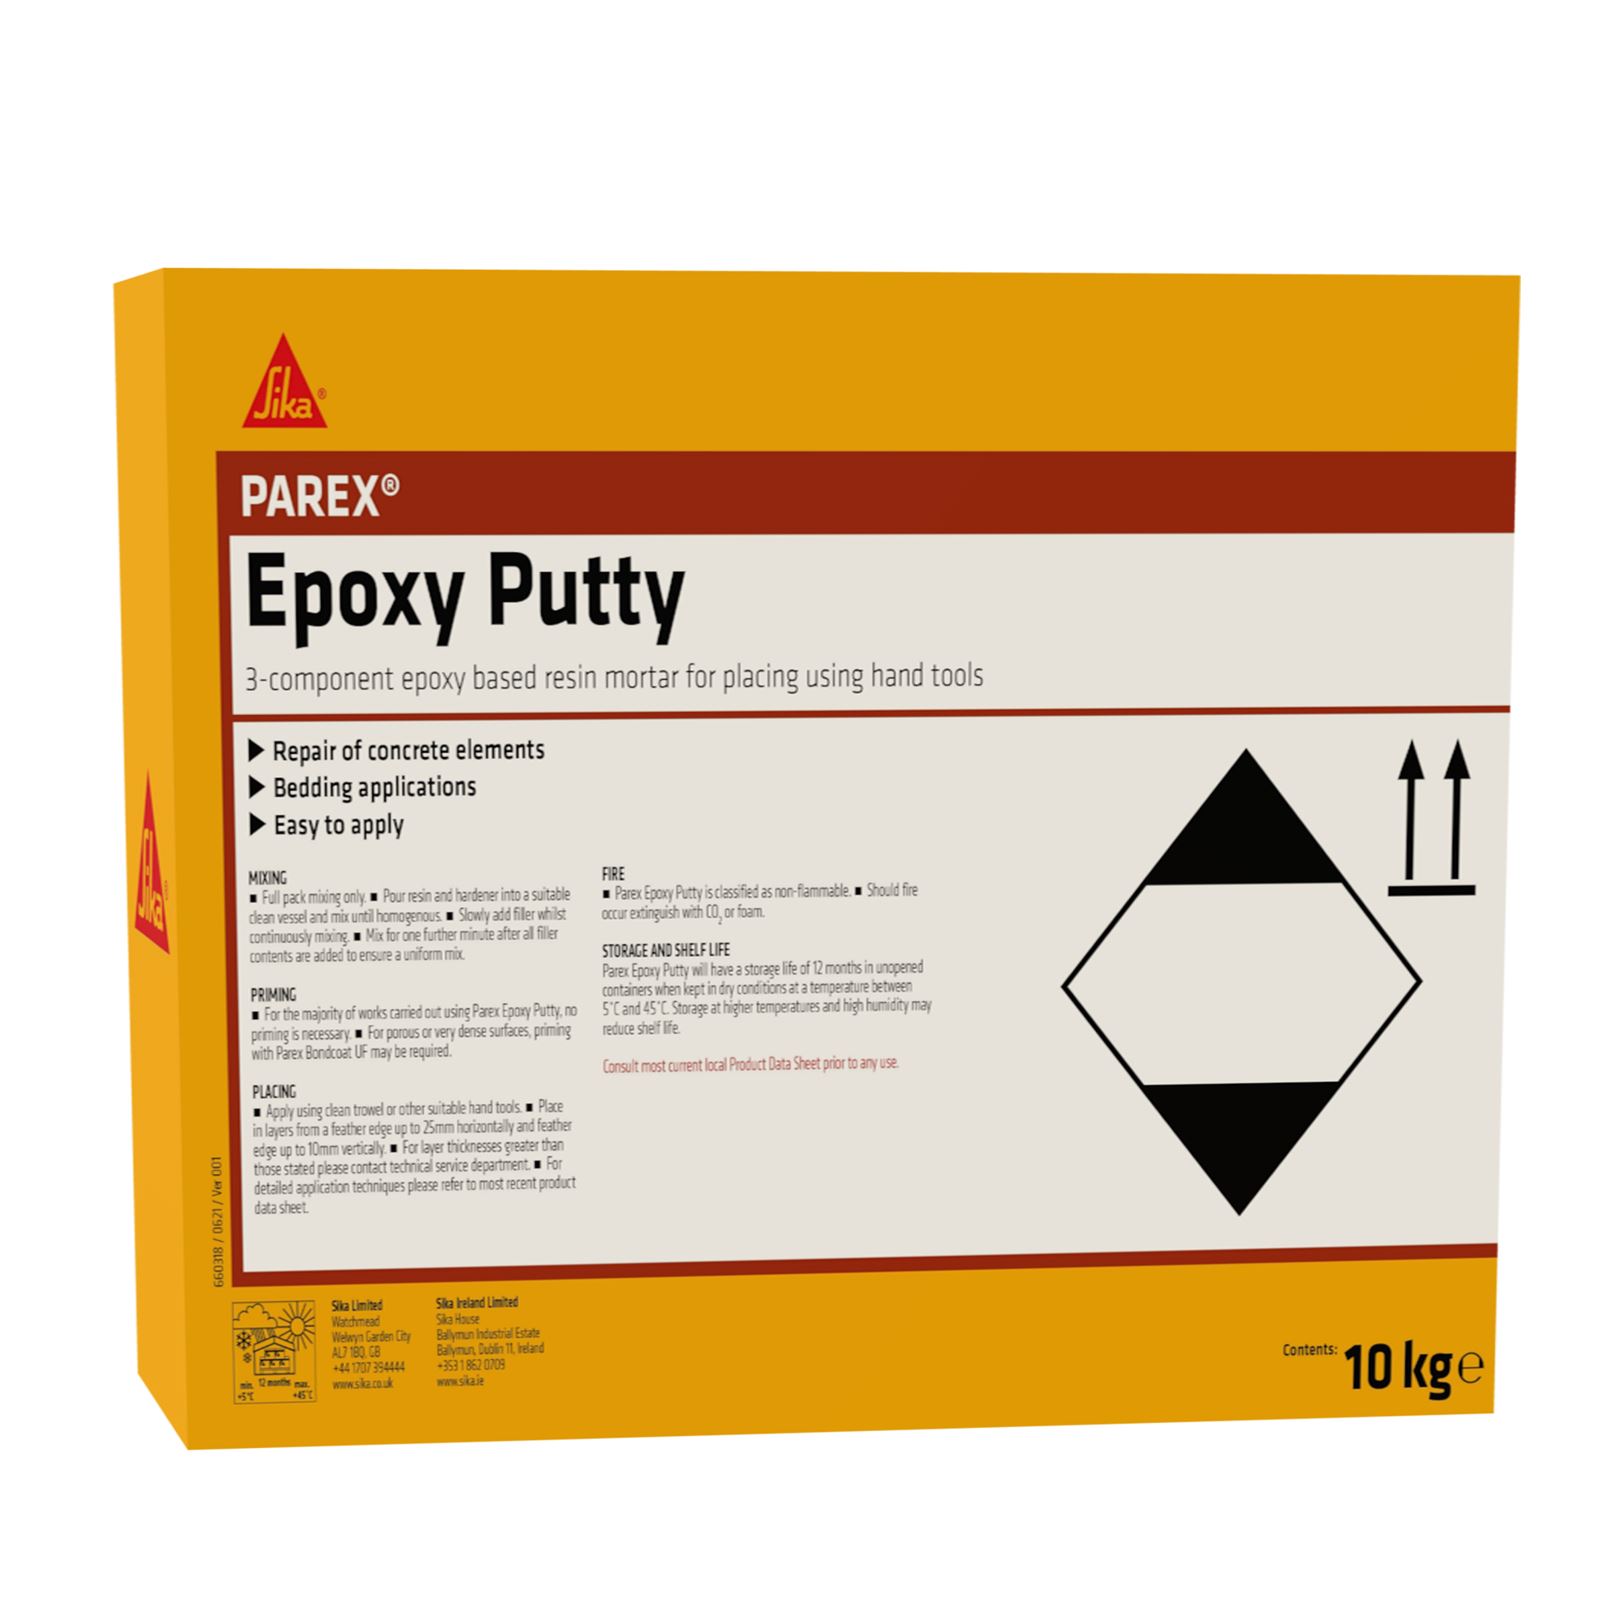 Parex Epoxy Putty